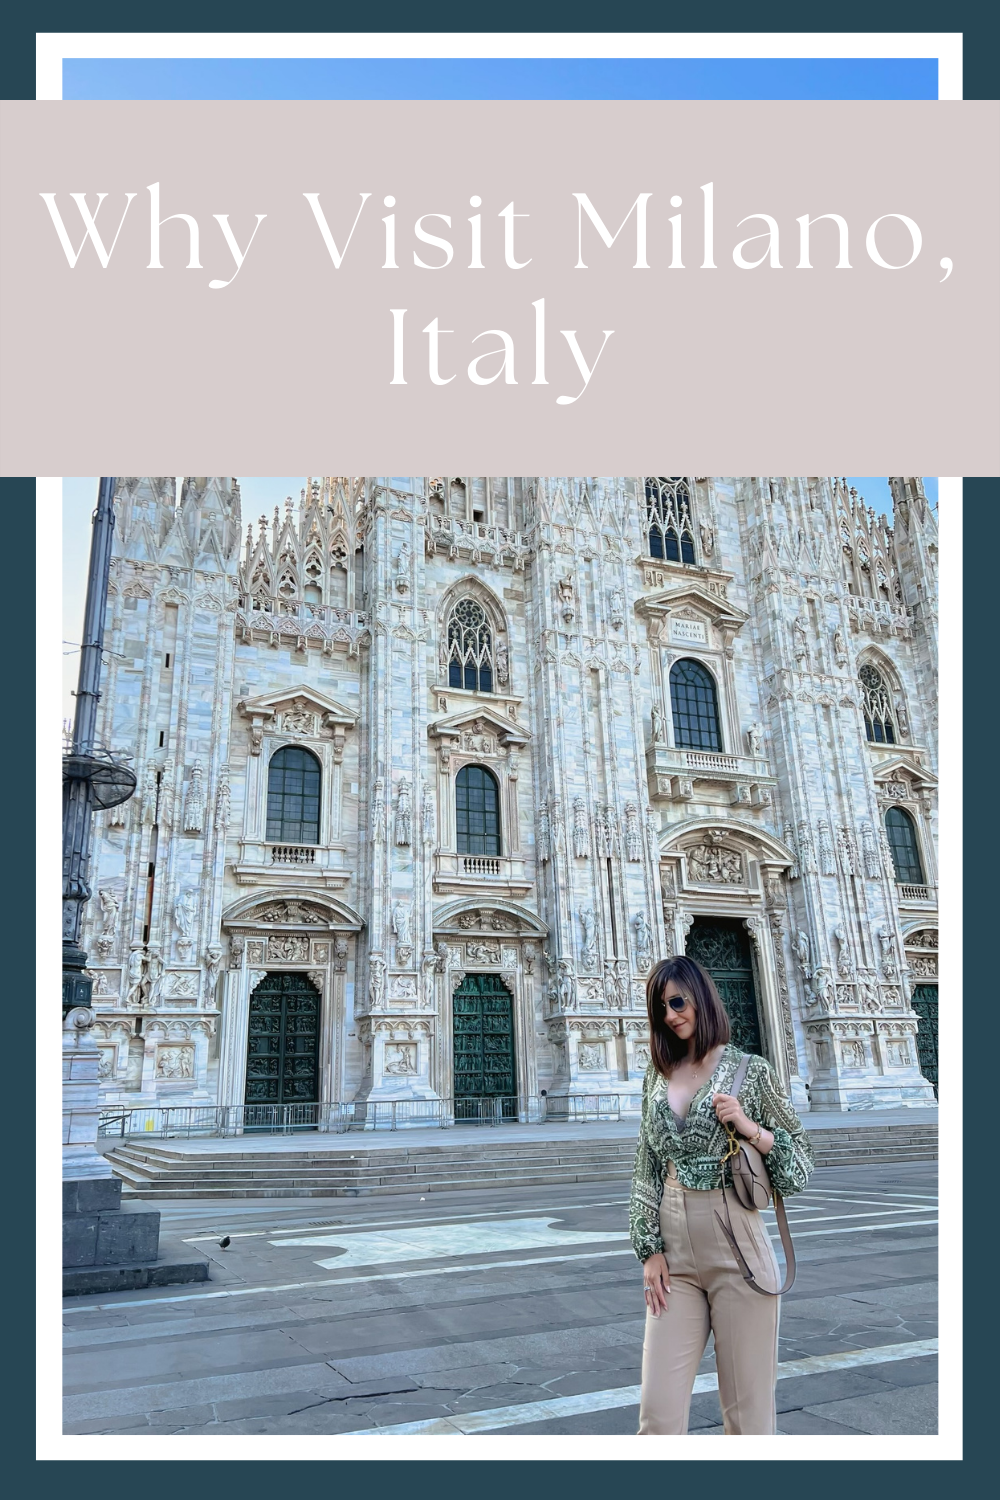 Why visit Milano Italy by My Next Pin